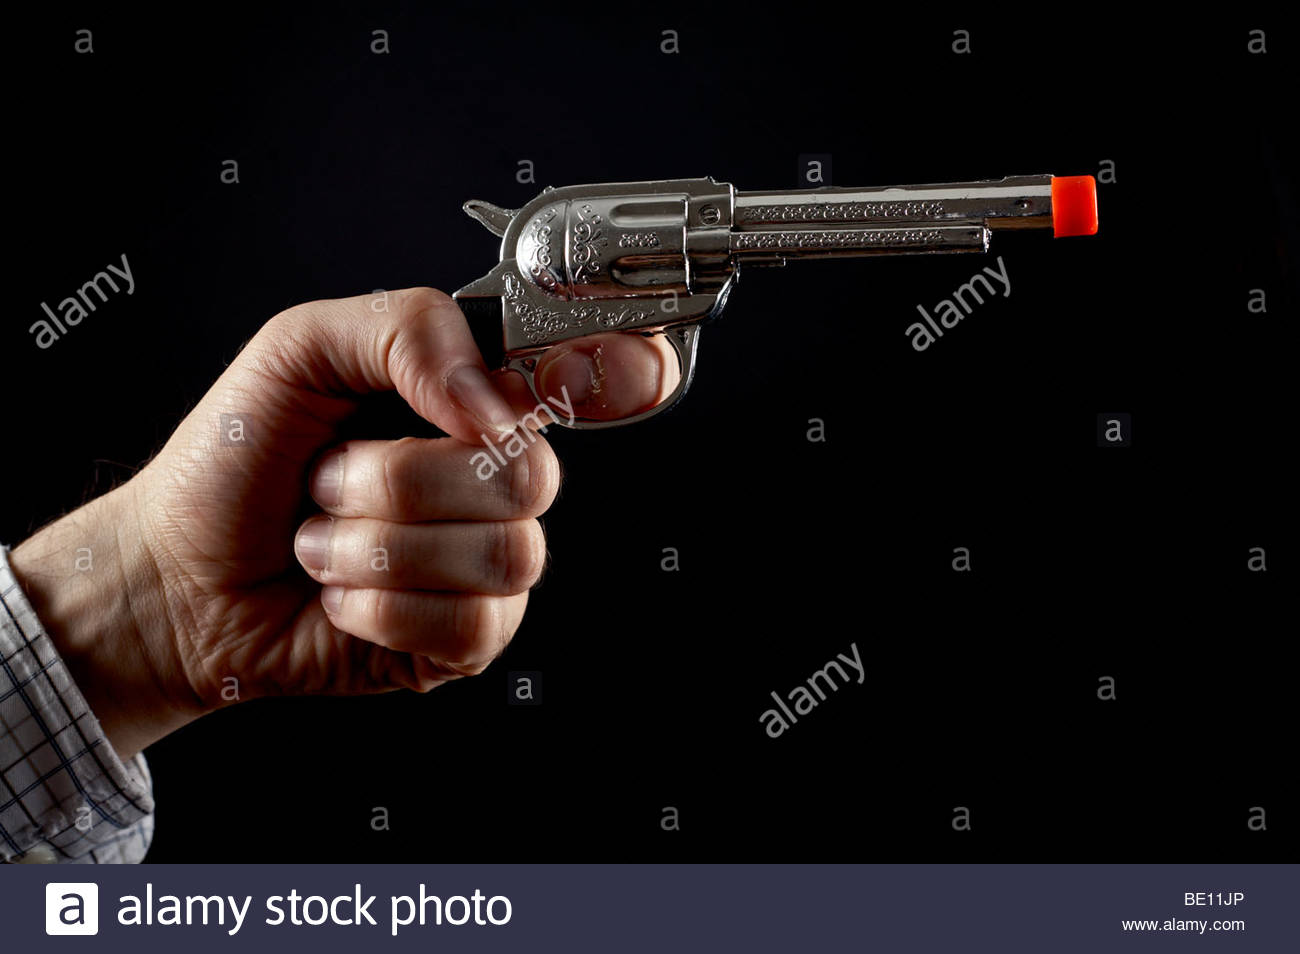 Man holding toy gun Banque D'Images